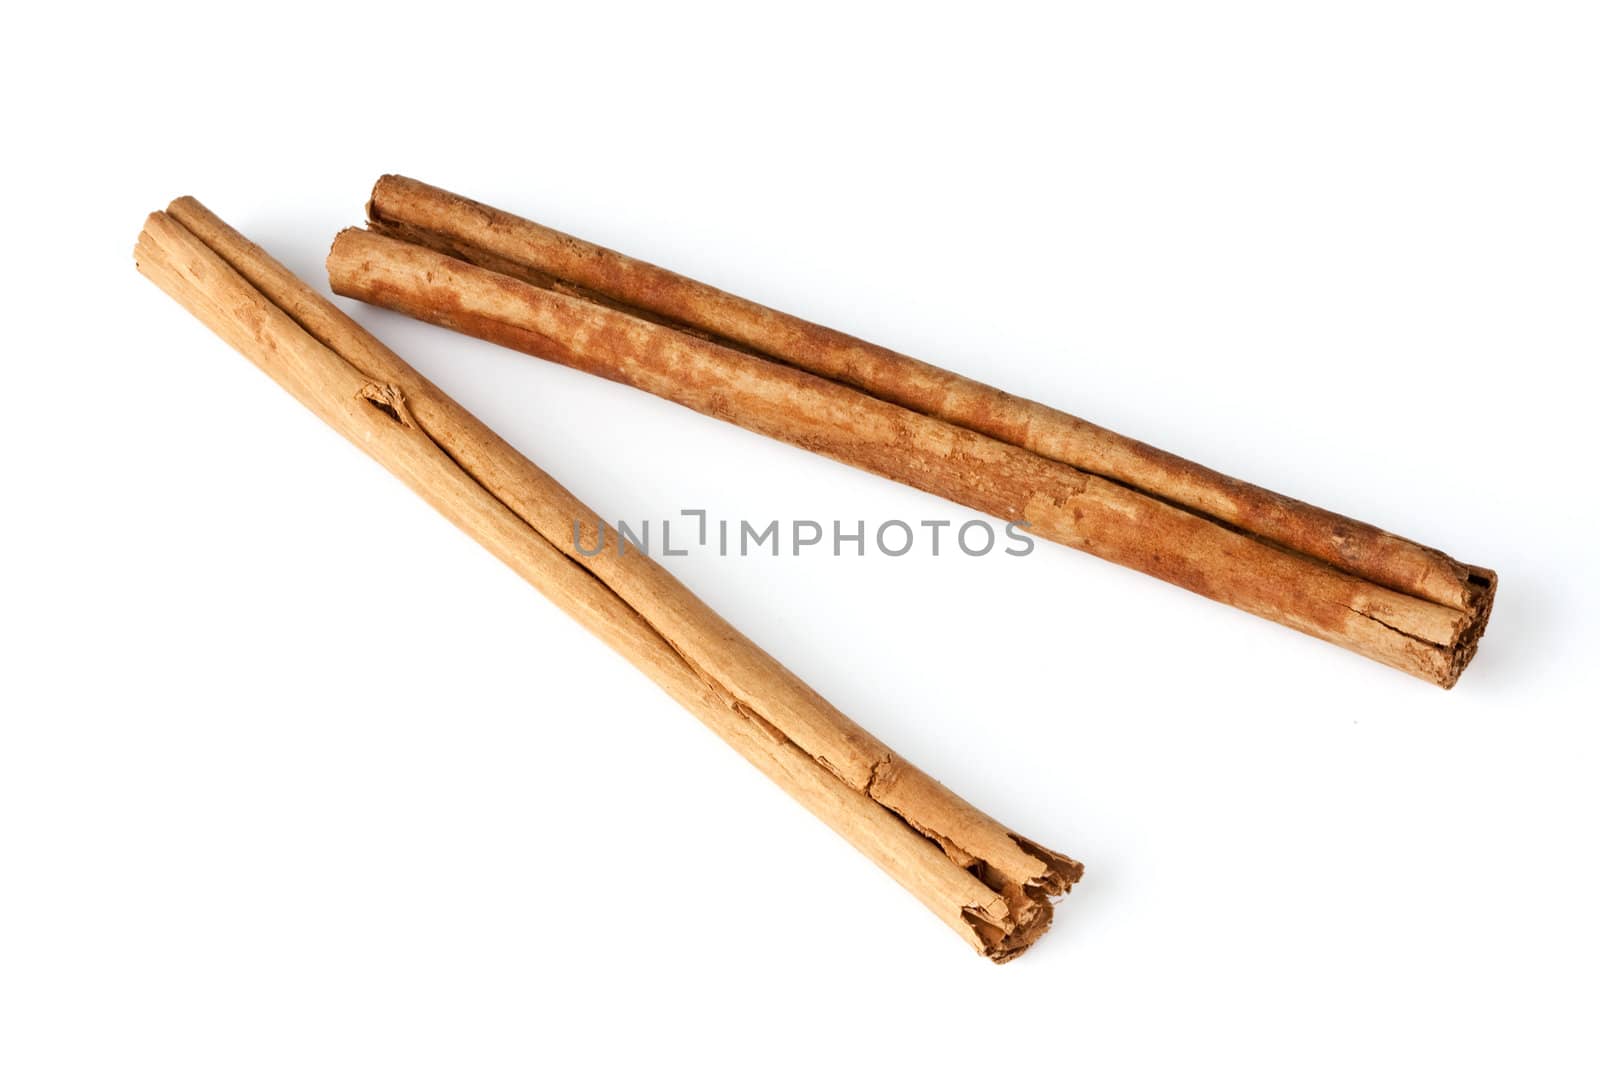 Cinnamon sticks by posterize